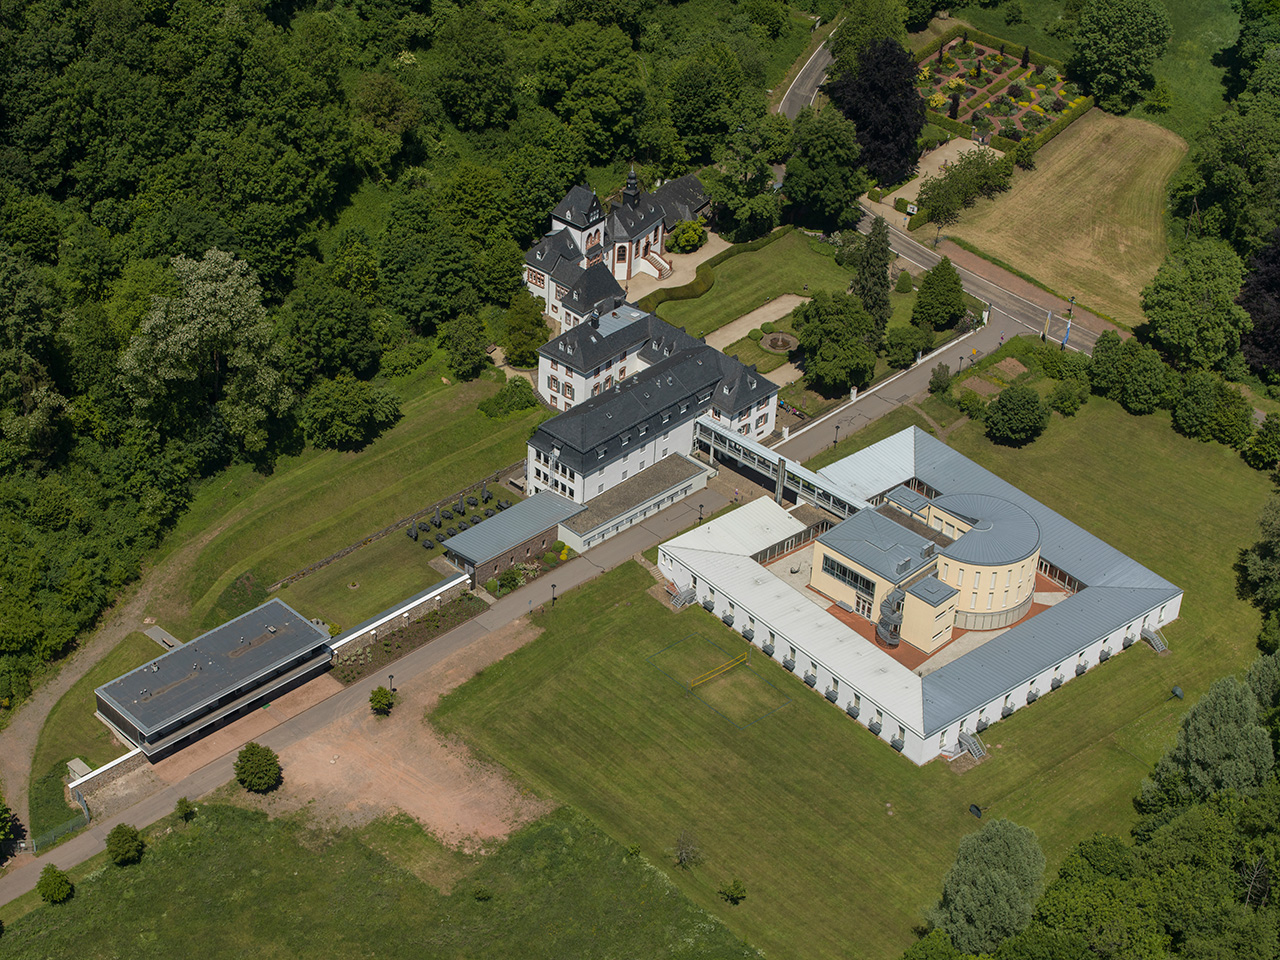 Schloss Dagstuhl - Leibniz-Zentrum für Informatik